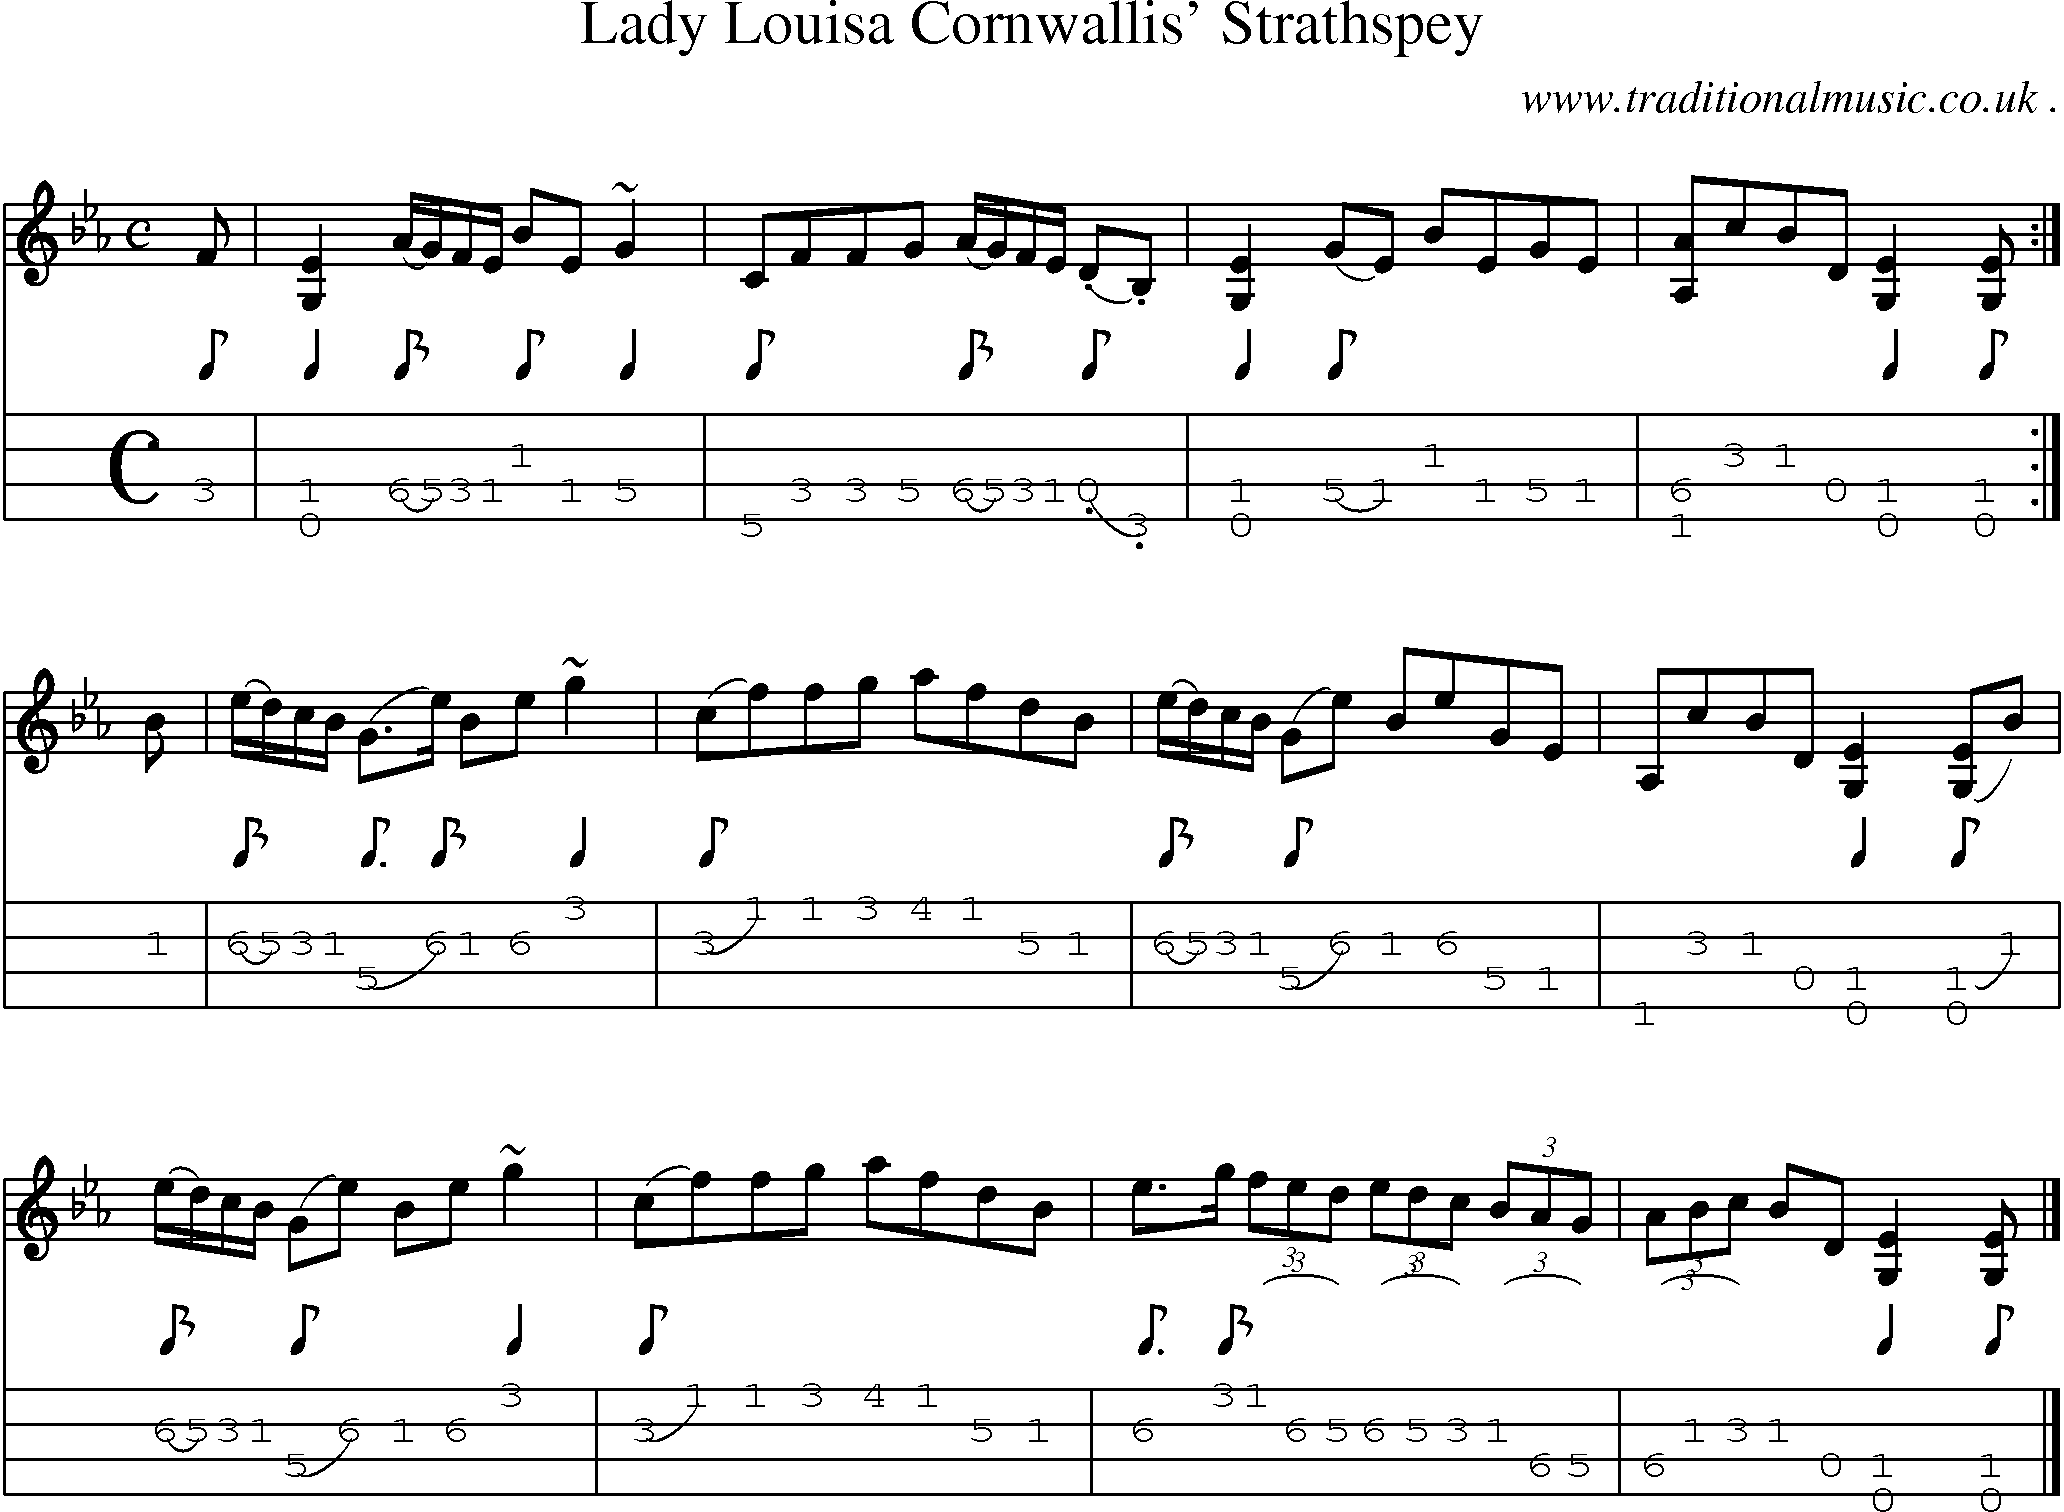 Sheet-music  score, Chords and Mandolin Tabs for Lady Louisa Cornwallis Strathspey